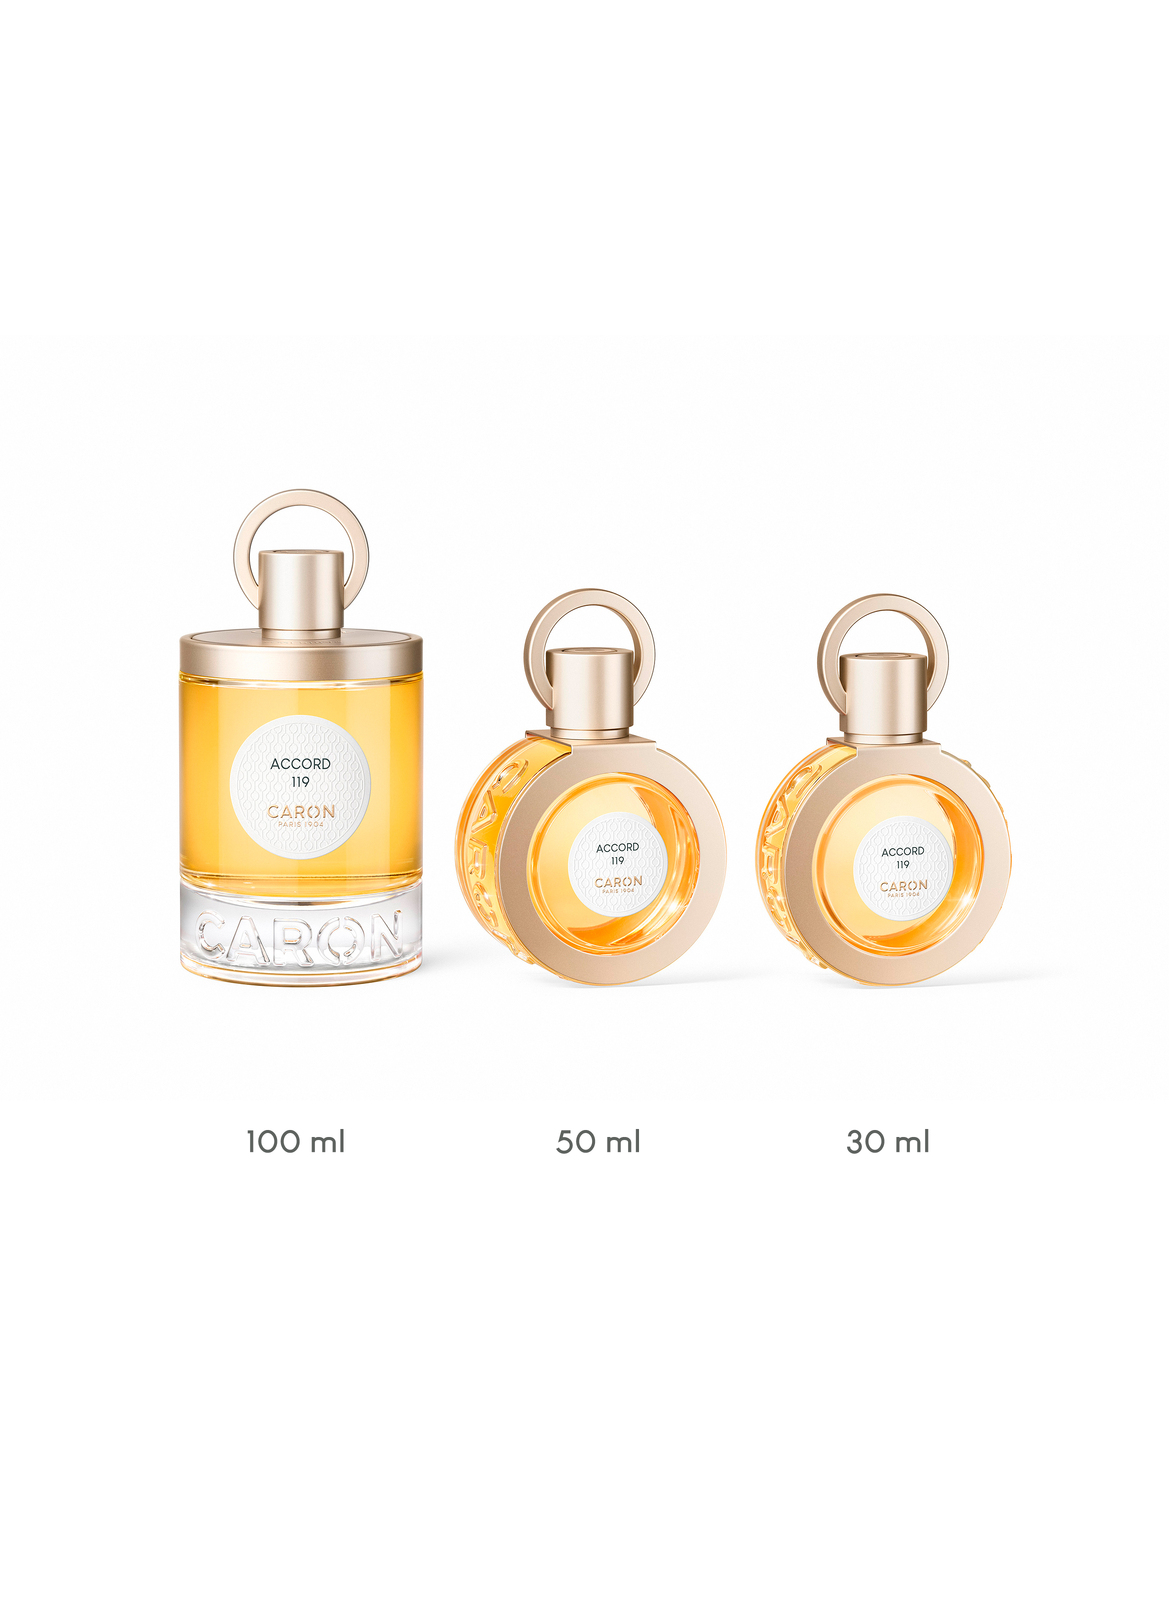 CARON Accord 119 Perfume 100ml Refillable